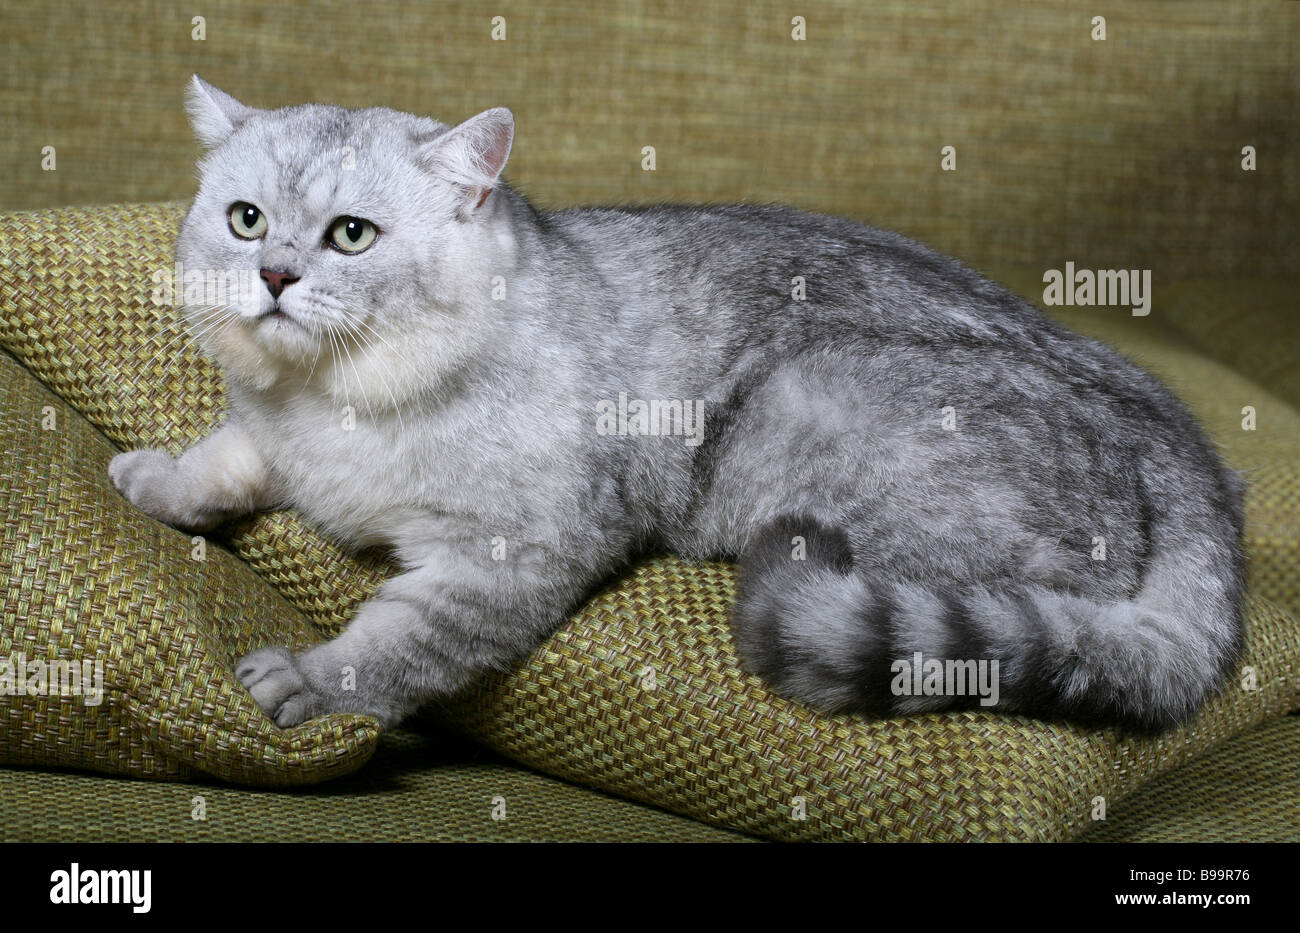 British Shorthair silver Cat. Stock Photo